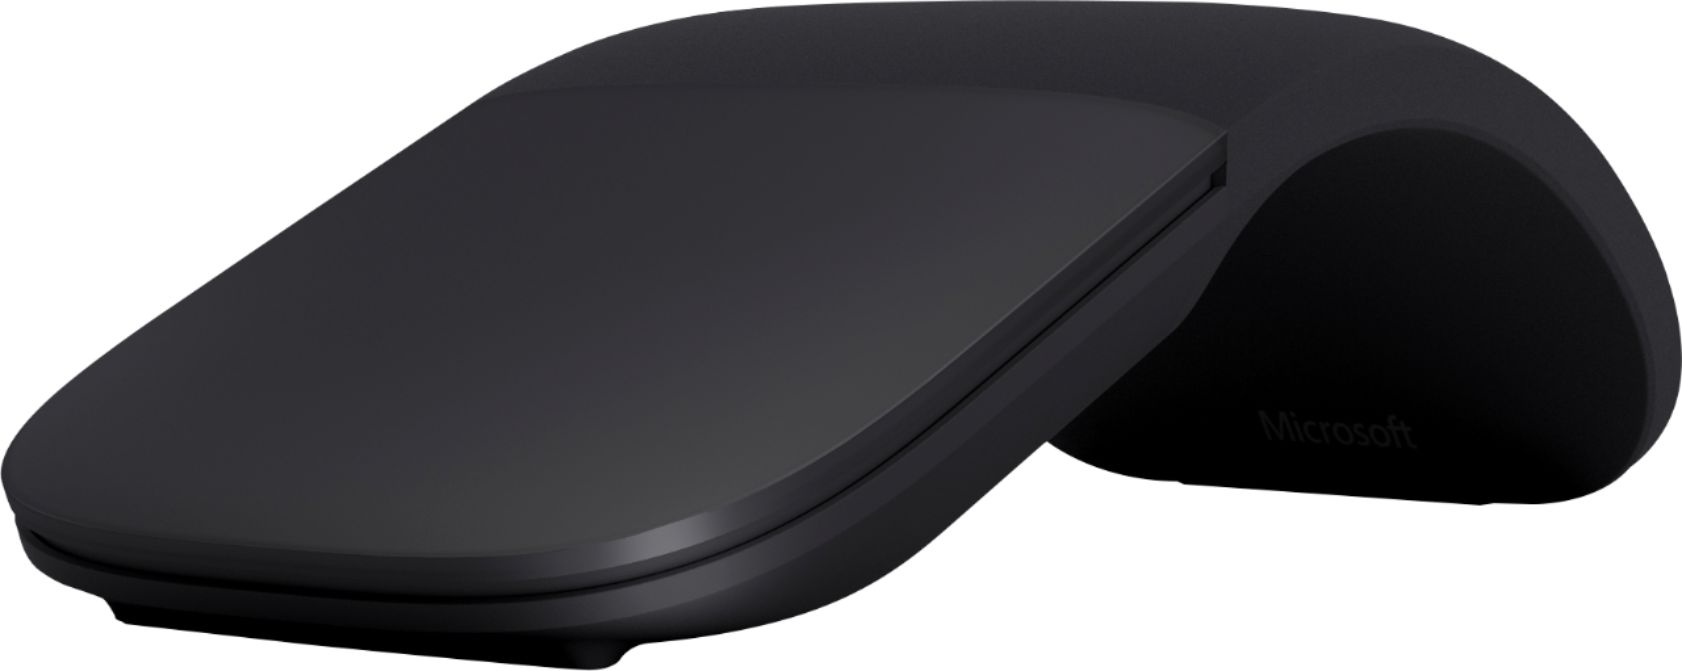 Buy - Microsoft Mouse Best Ambidextrous Arc Wireless Black CZV-00097/ELG-00001 Surface BlueTrack